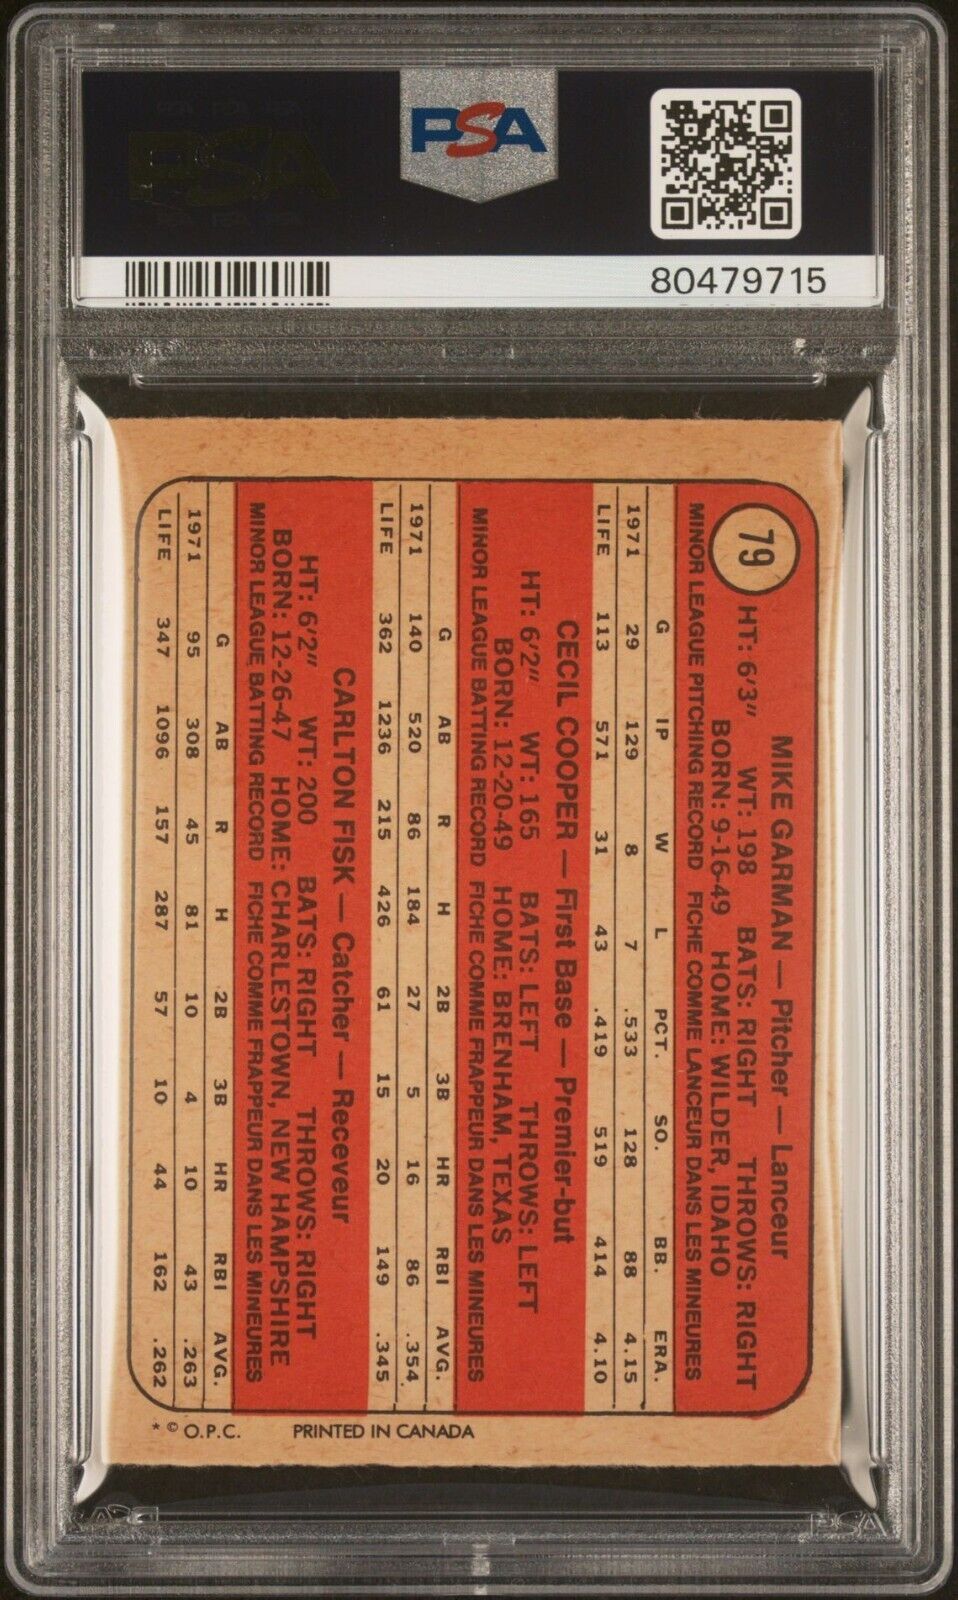 1972 O-Pee-Chee OPC Baseball #79 Red Sox Rookies Garman/Cooper/Fisk PSA 7 RC - 643-collectibles